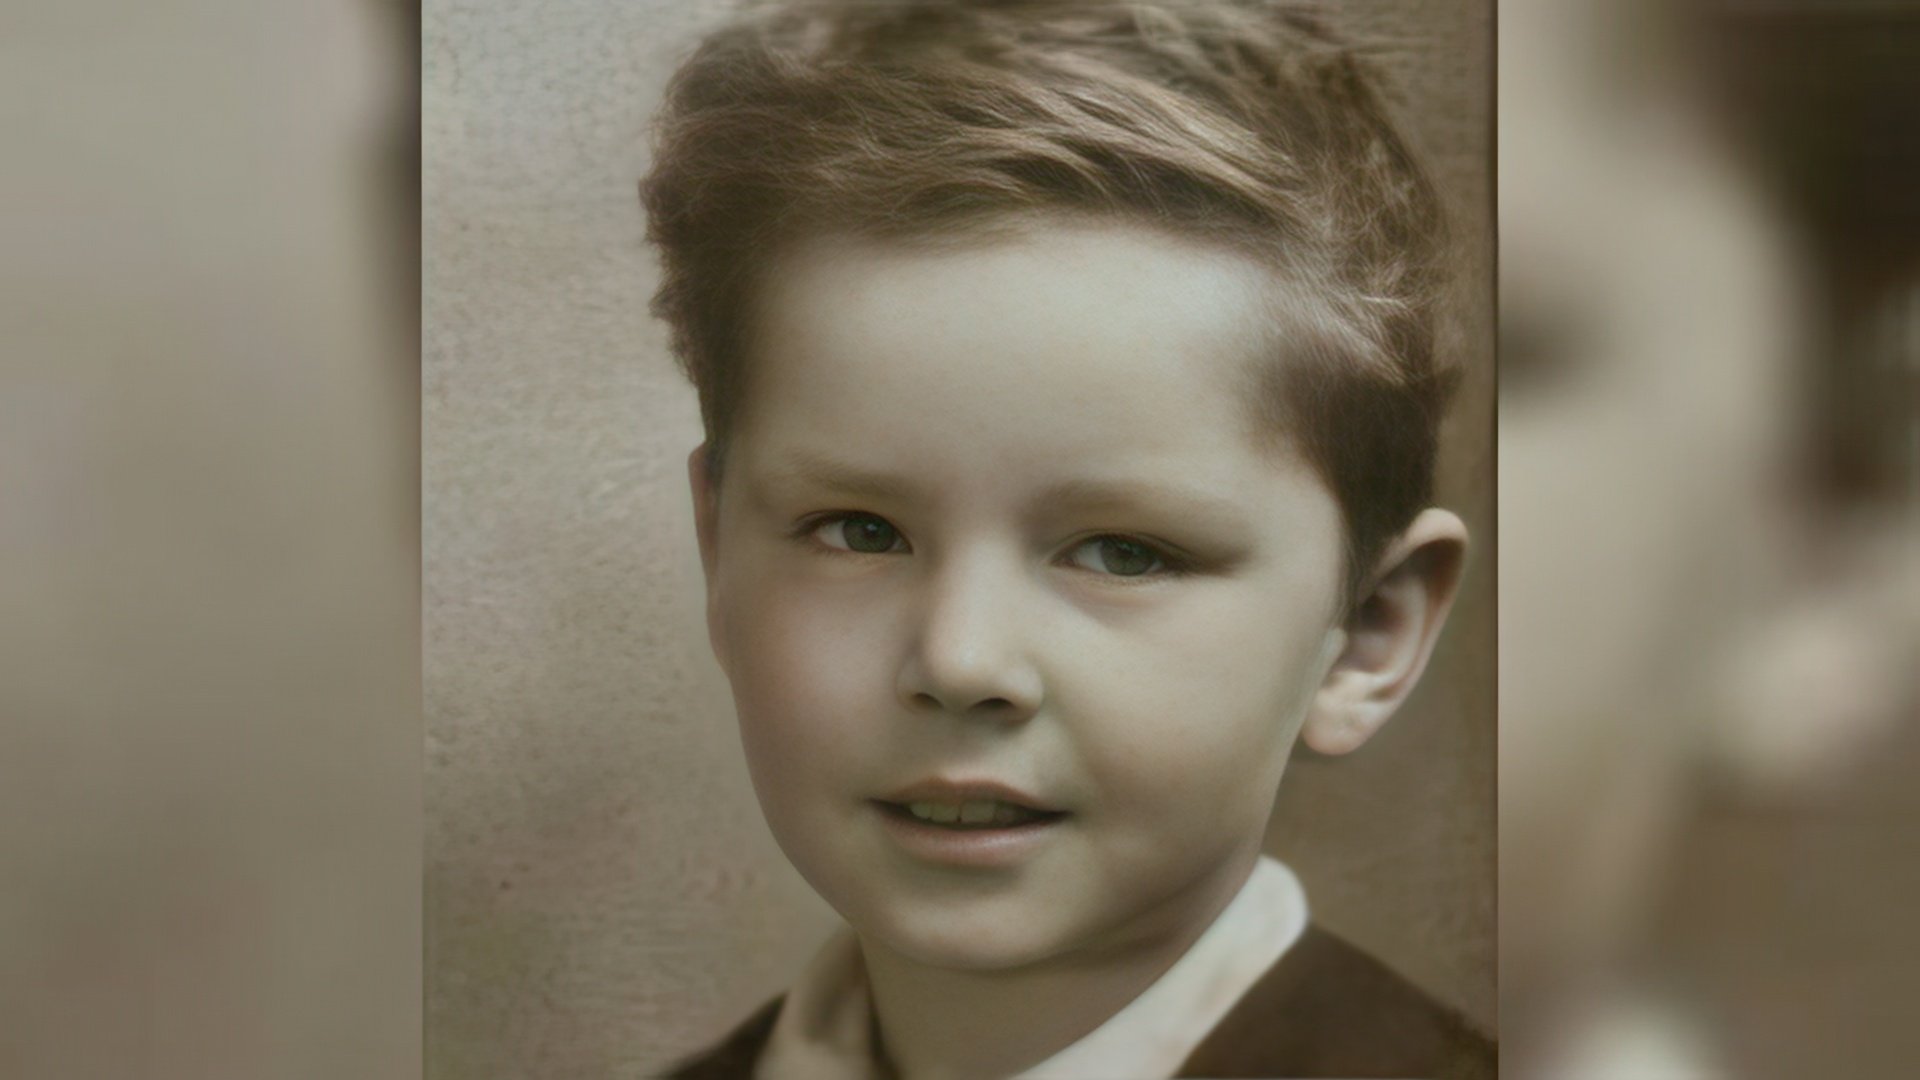 Jack Nicholson's childhood photo